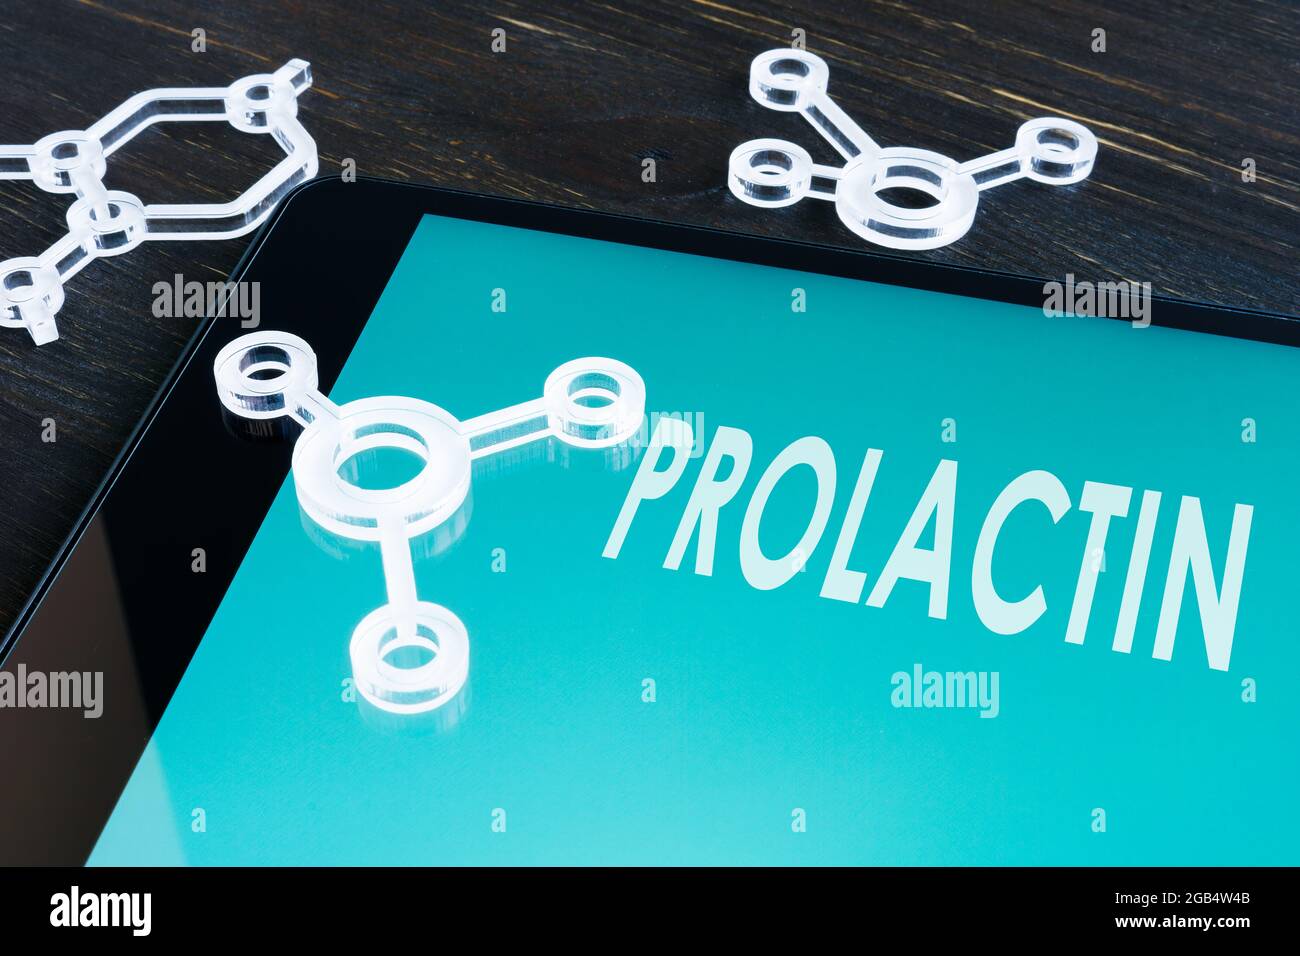 Prolactin hormone PRL word on the screen and moleculas. Stock Photo